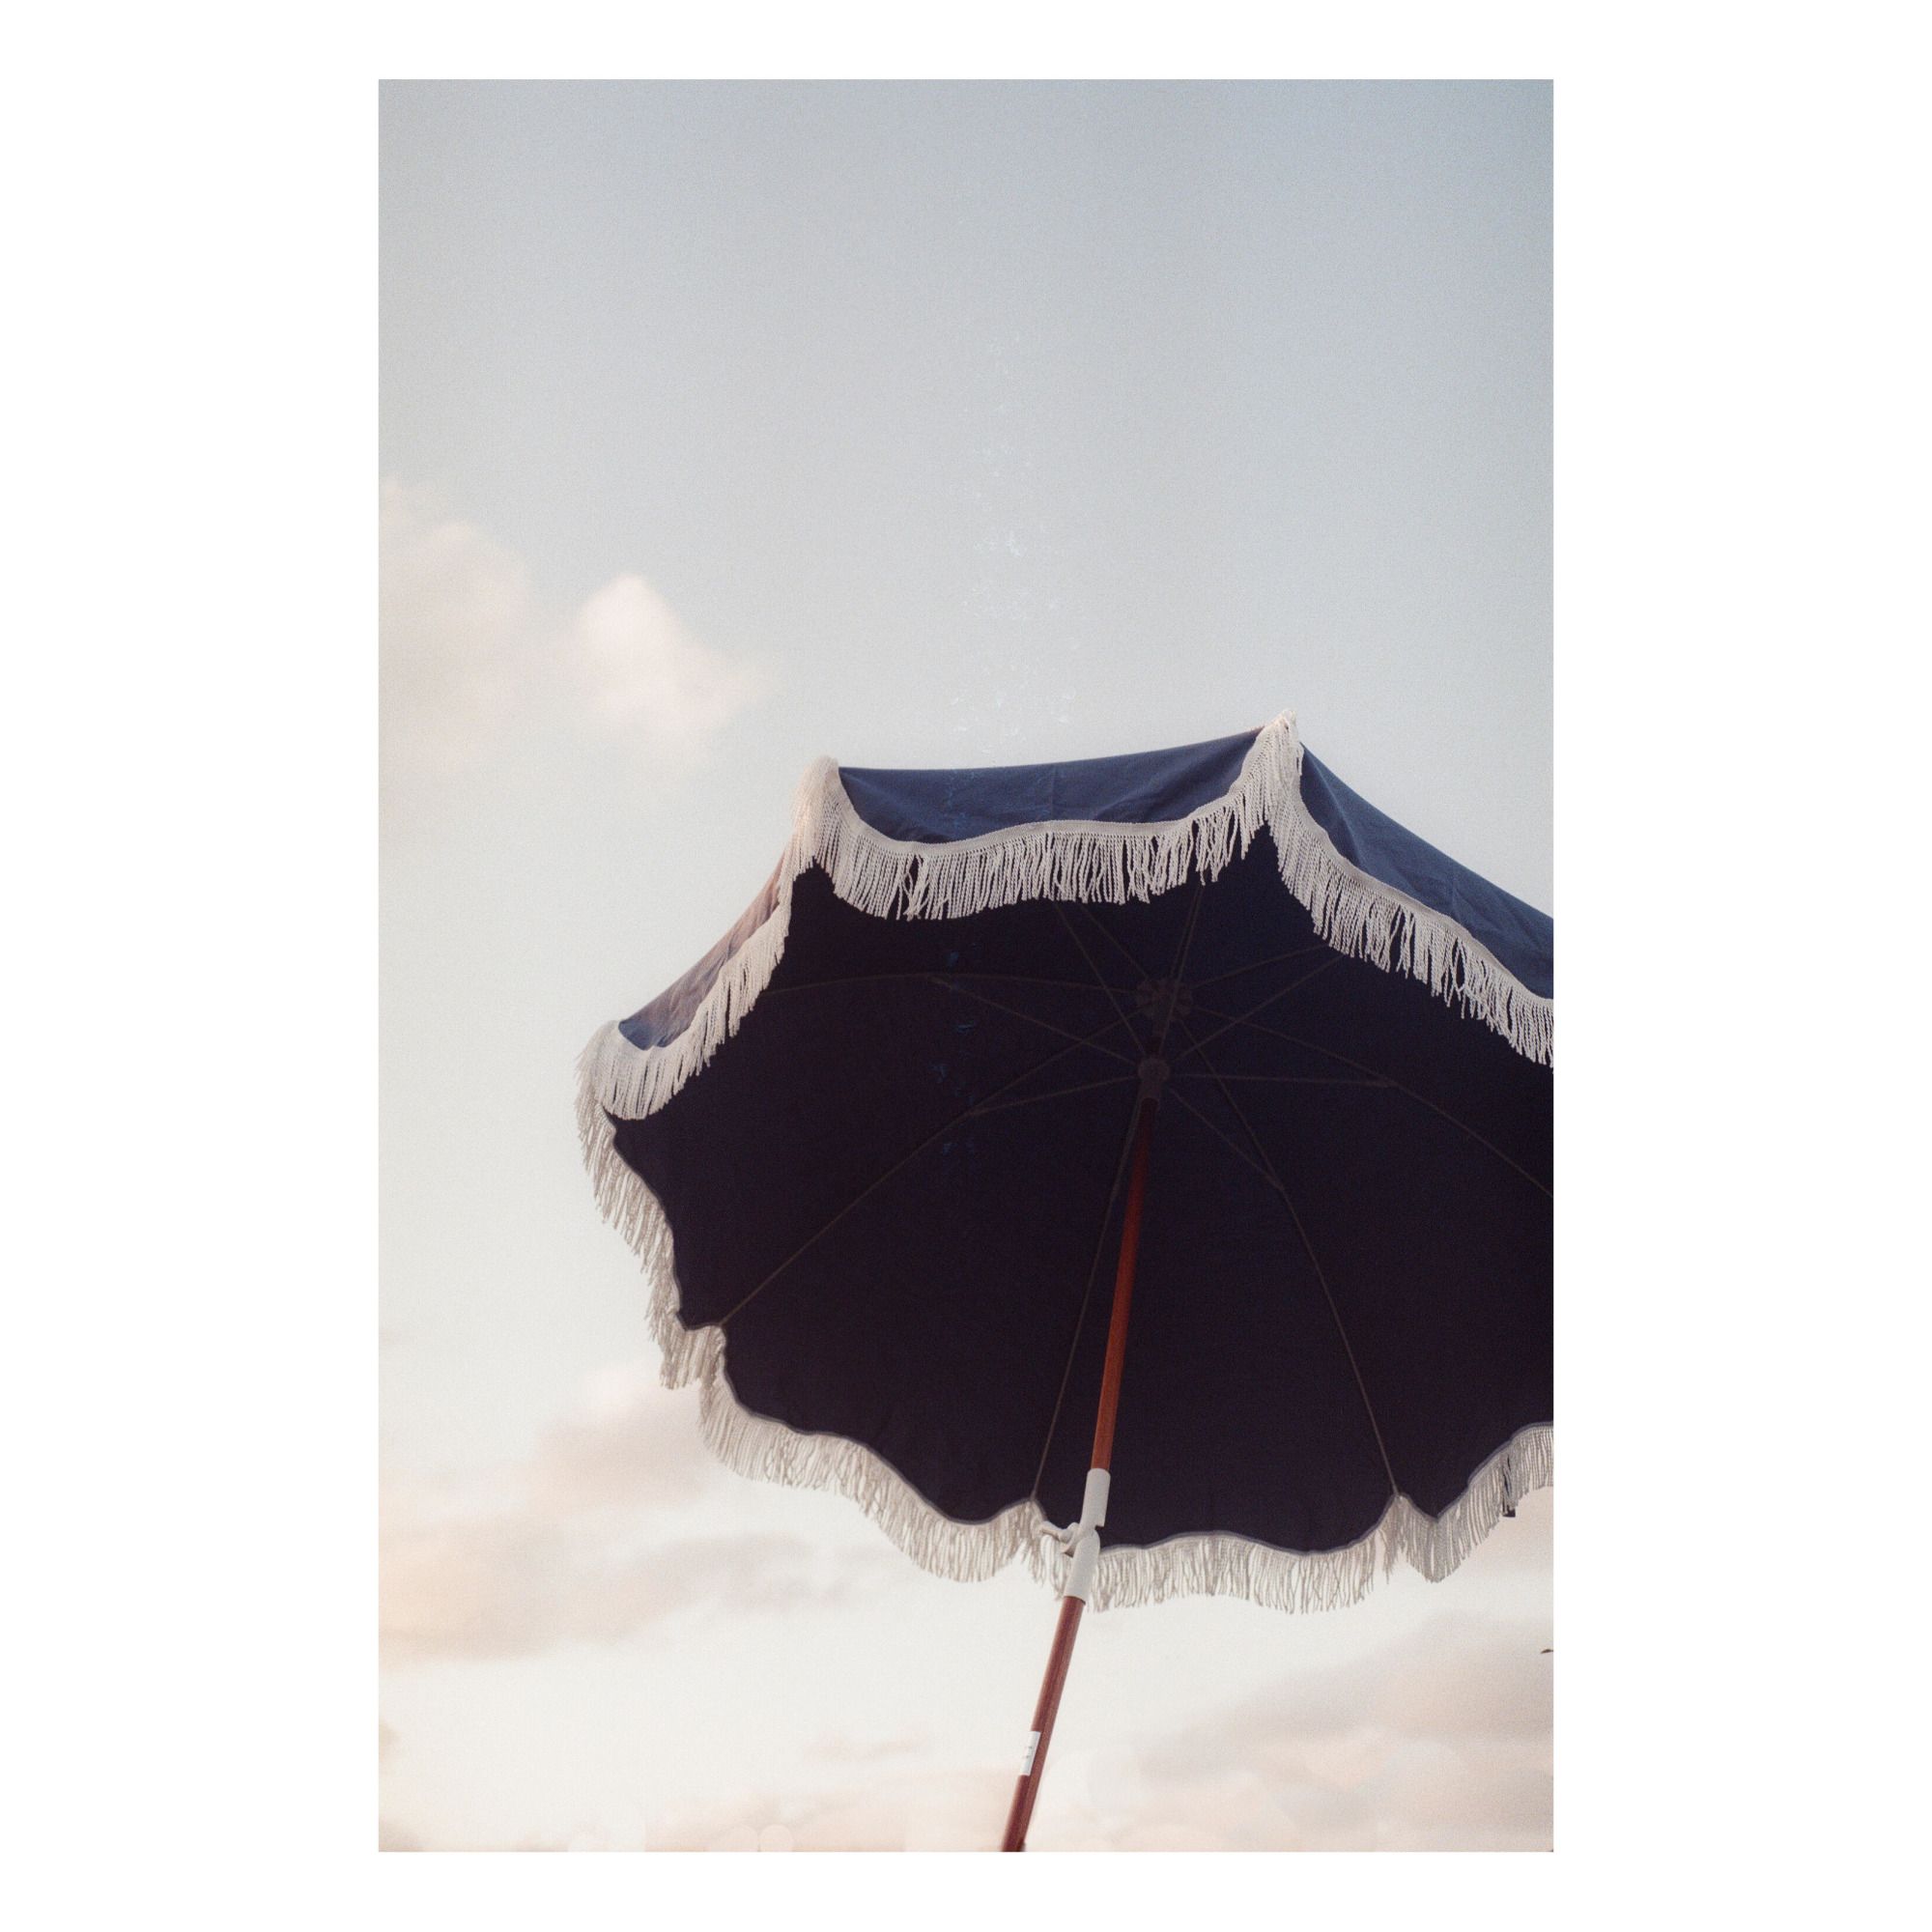 Parasol frangé Holiday Bleu- Image produit n°1